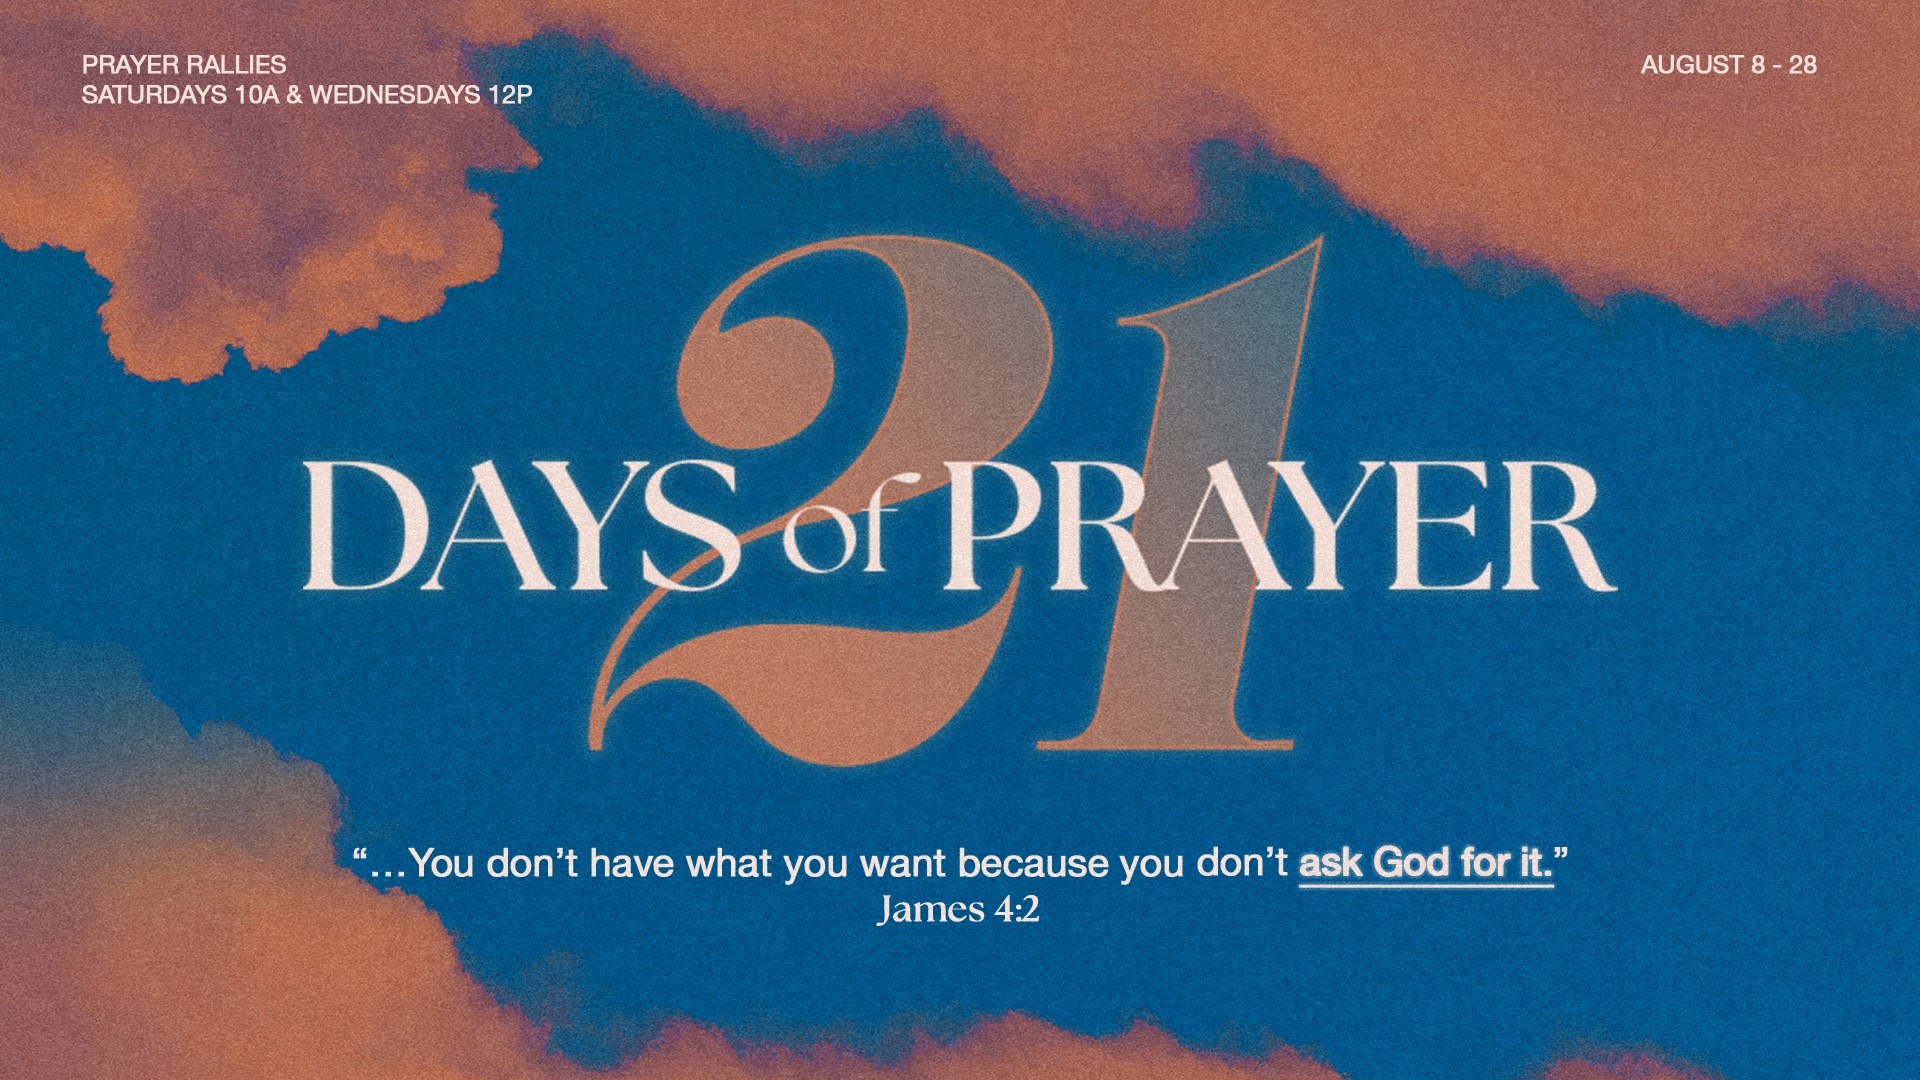 21 Days of Prayer Image